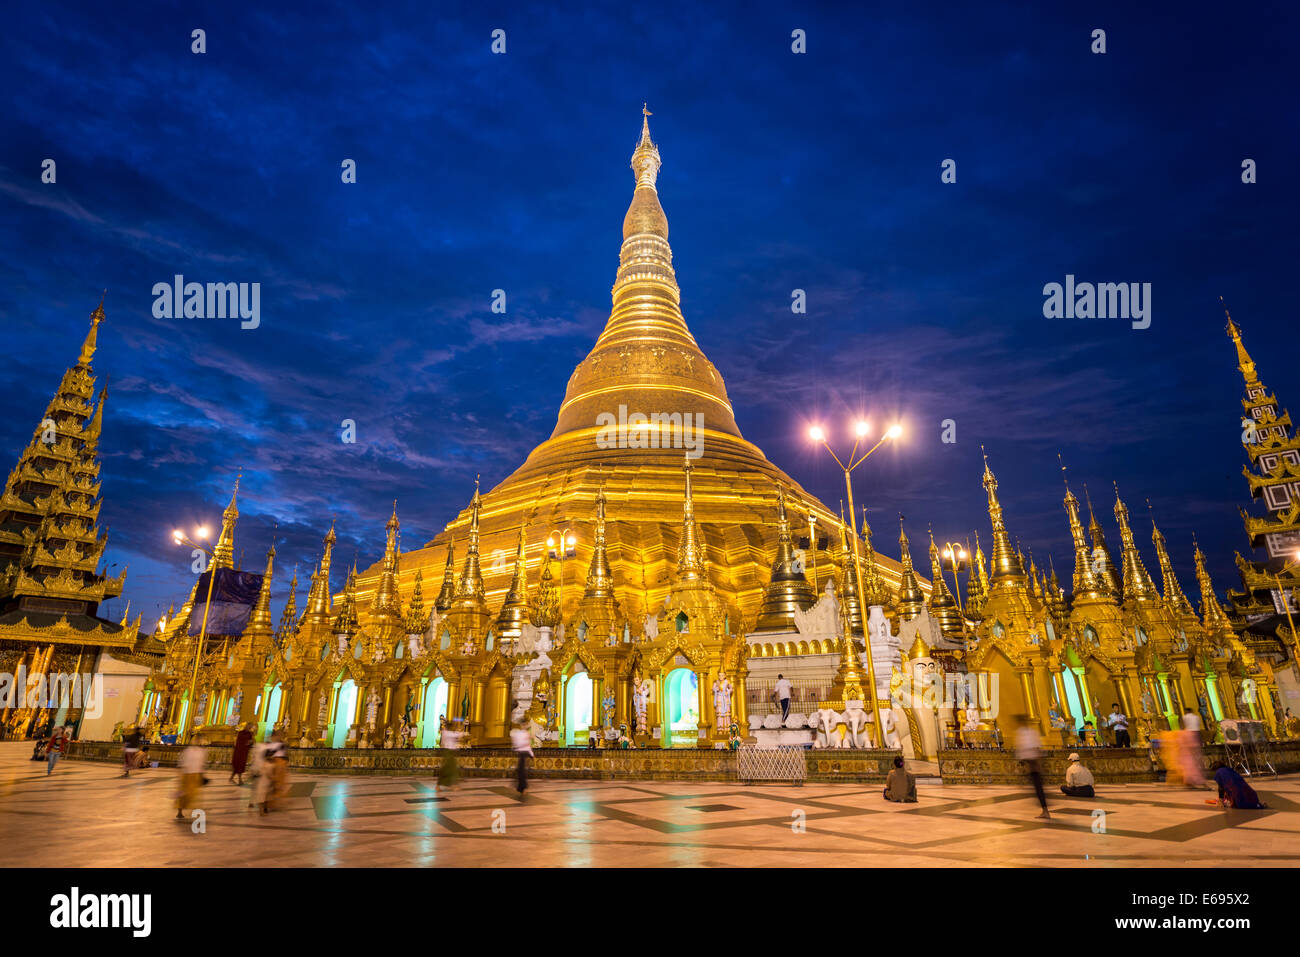 Gläubigen, goldene Hauptstupa, Chedi, blaue Stunde, Shwedagon-Pagode, Singuttara Hill, Yangon oder Rangoon, Region Yangon, Myanmar Stockfoto